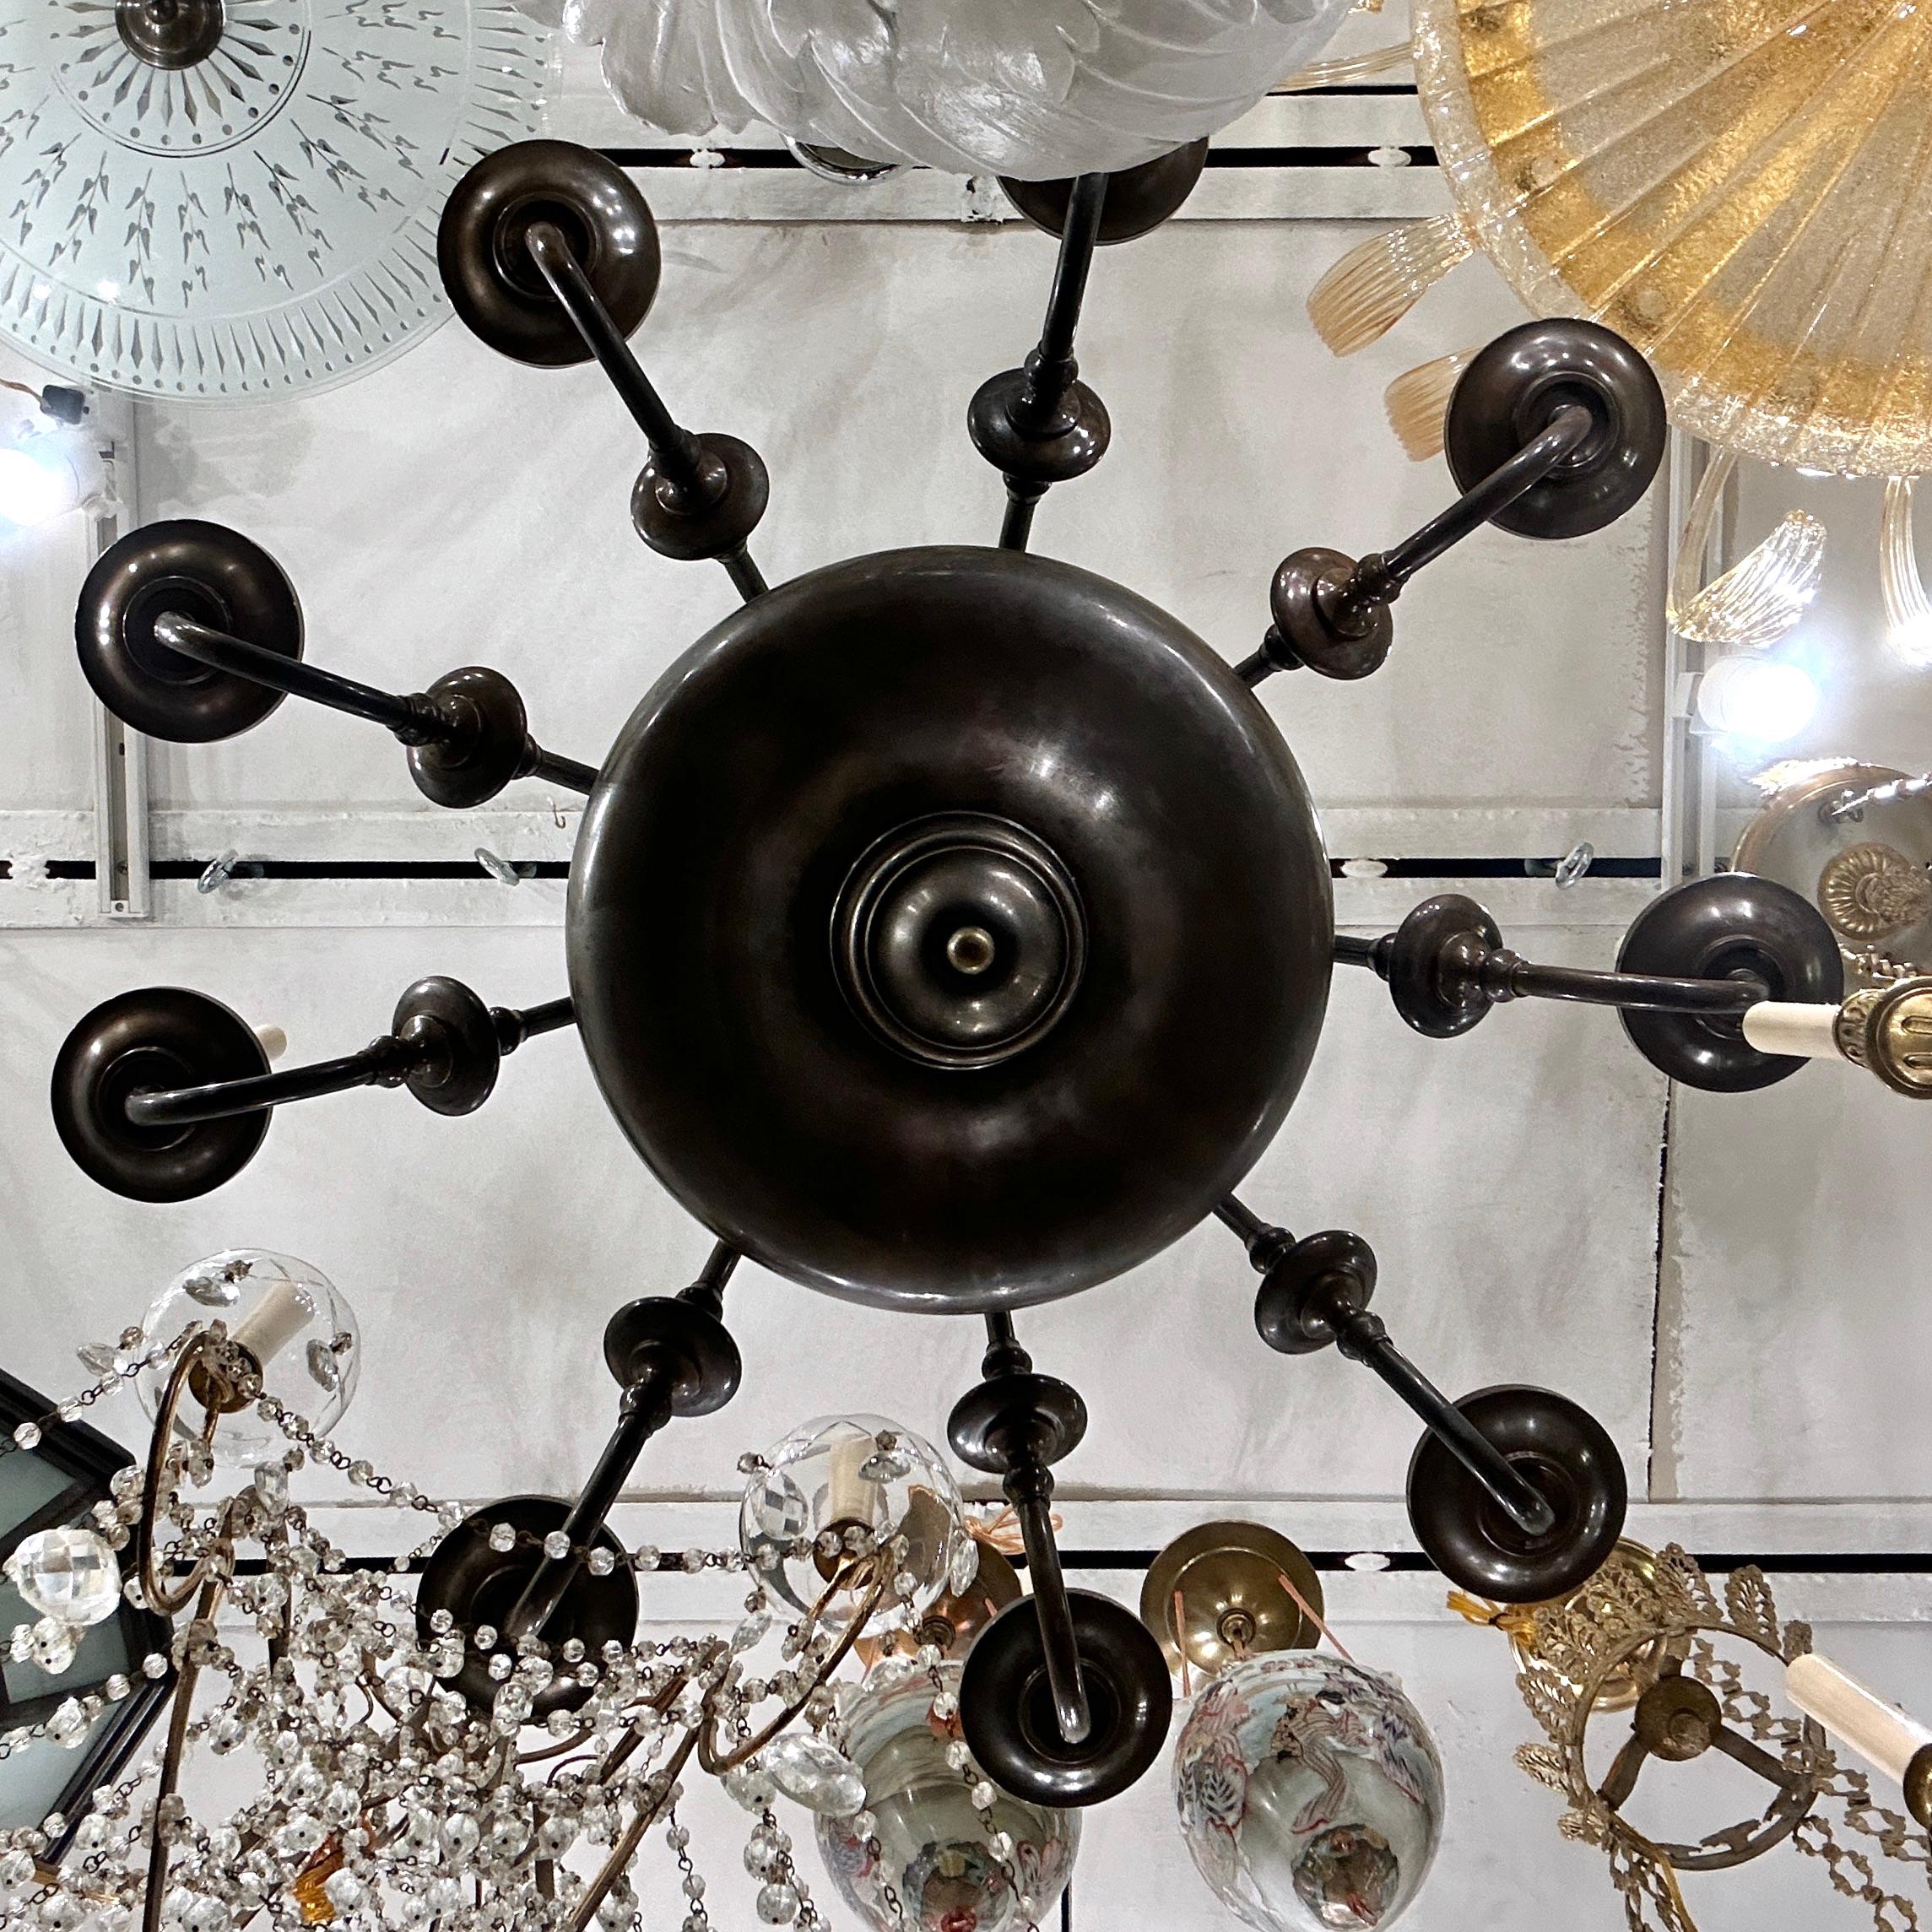 A circa 1920's antique patinated bronze Dutch chandelier with 8 lights.

Measurements:
Diameter: 38